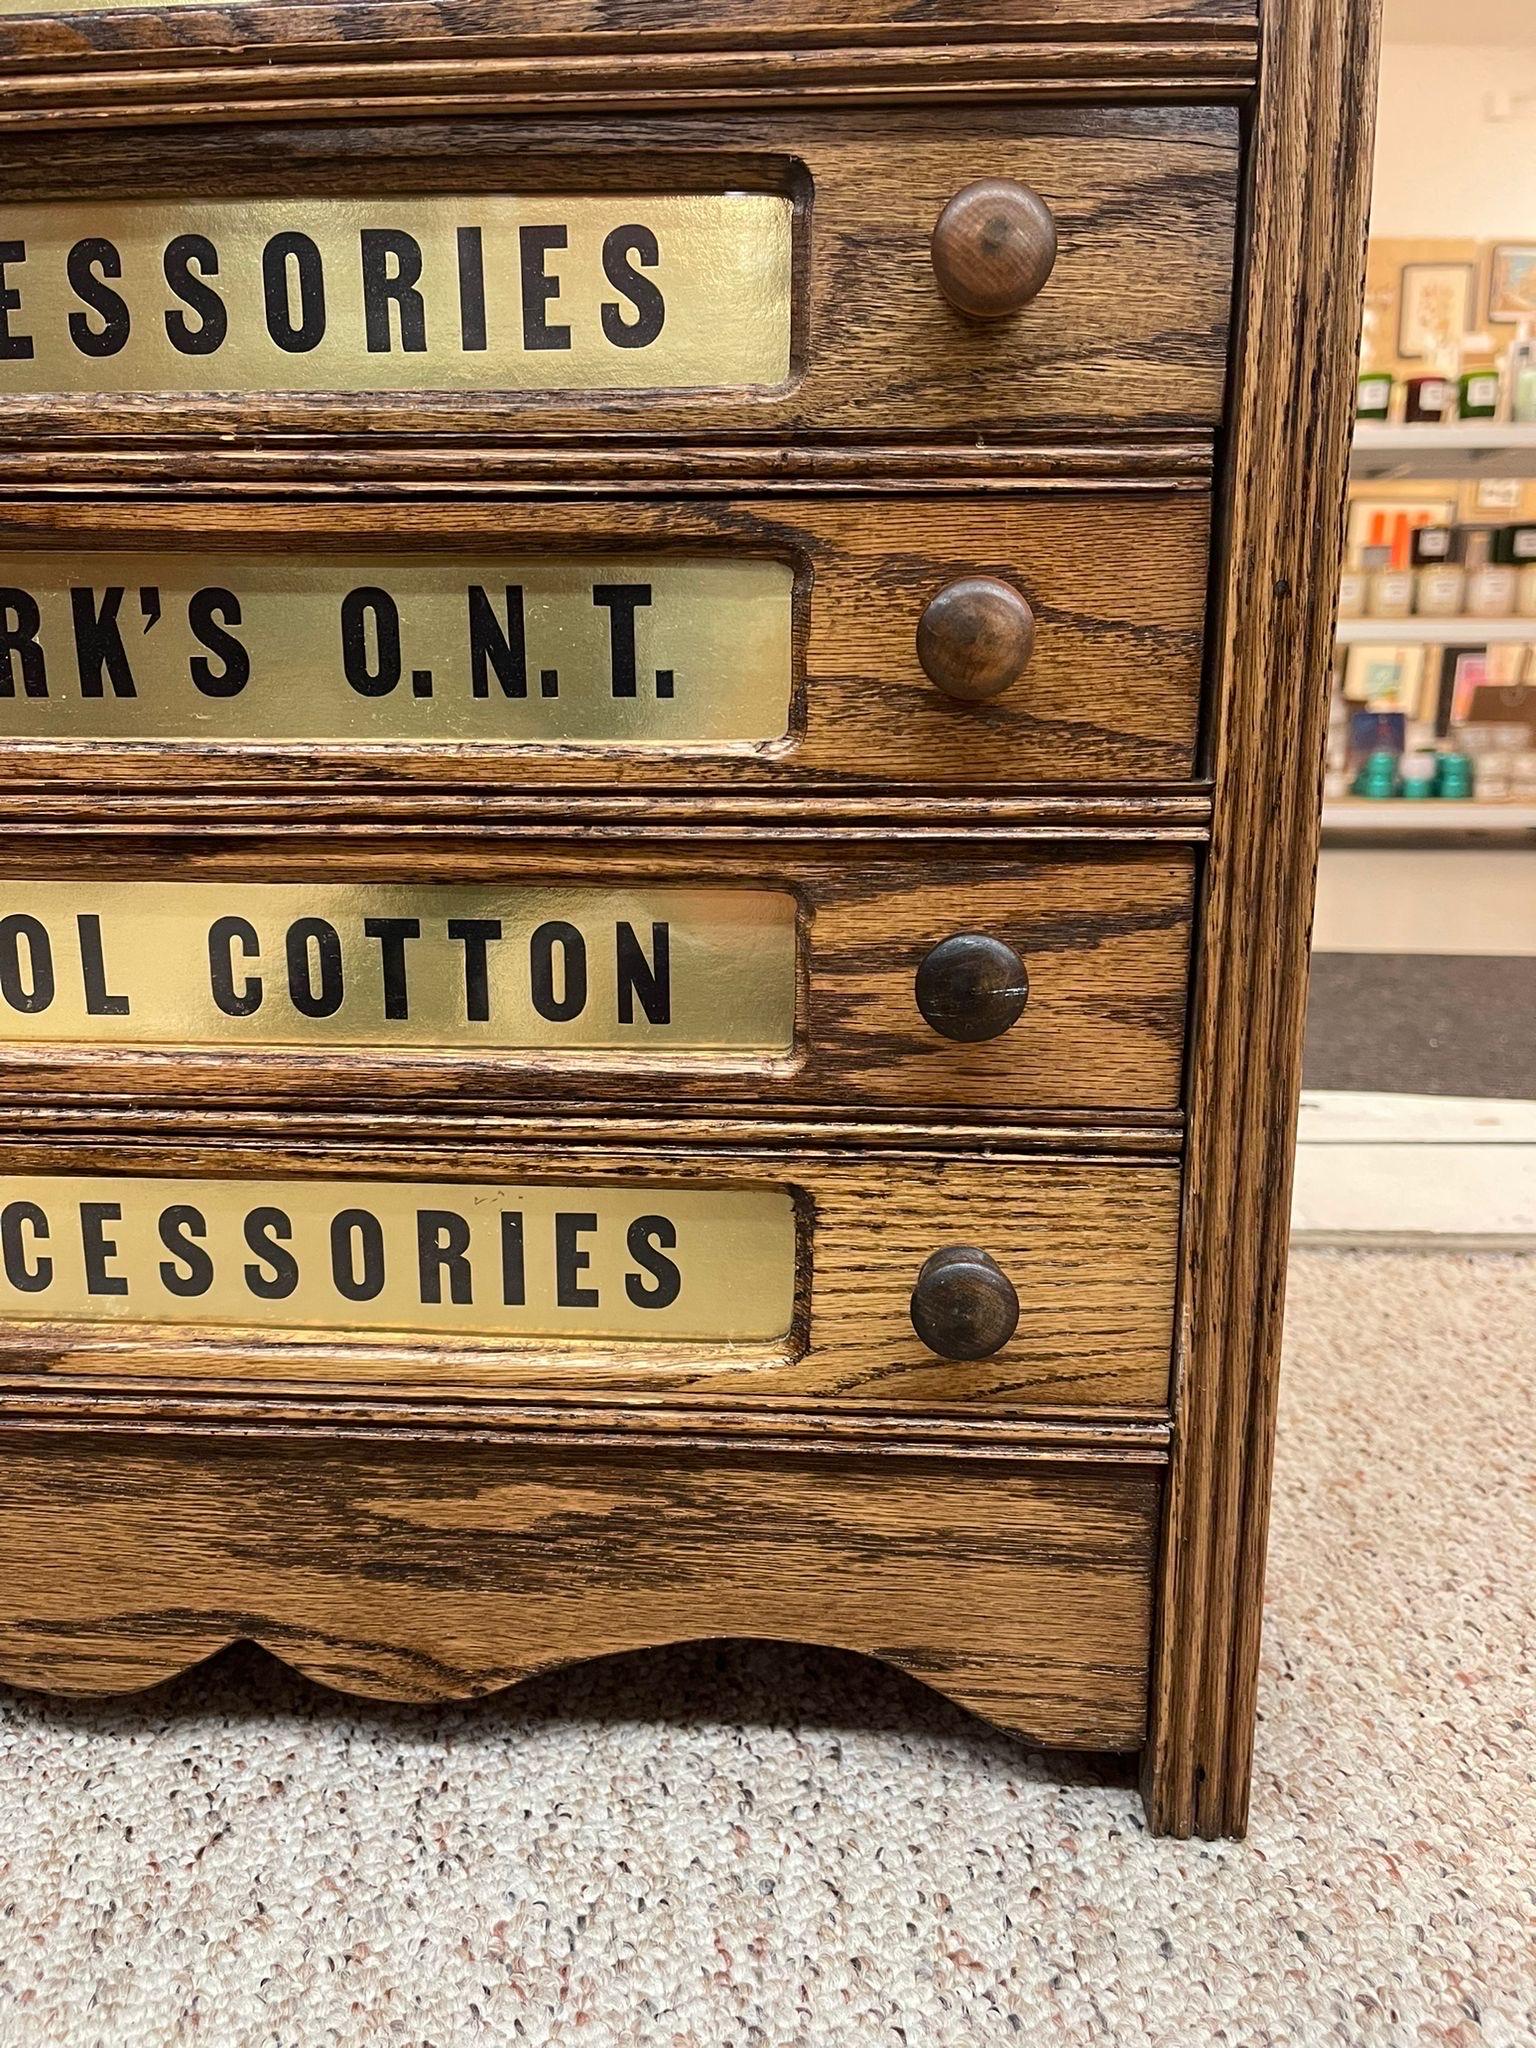 clark's o.n.t. spool cotton cabinet